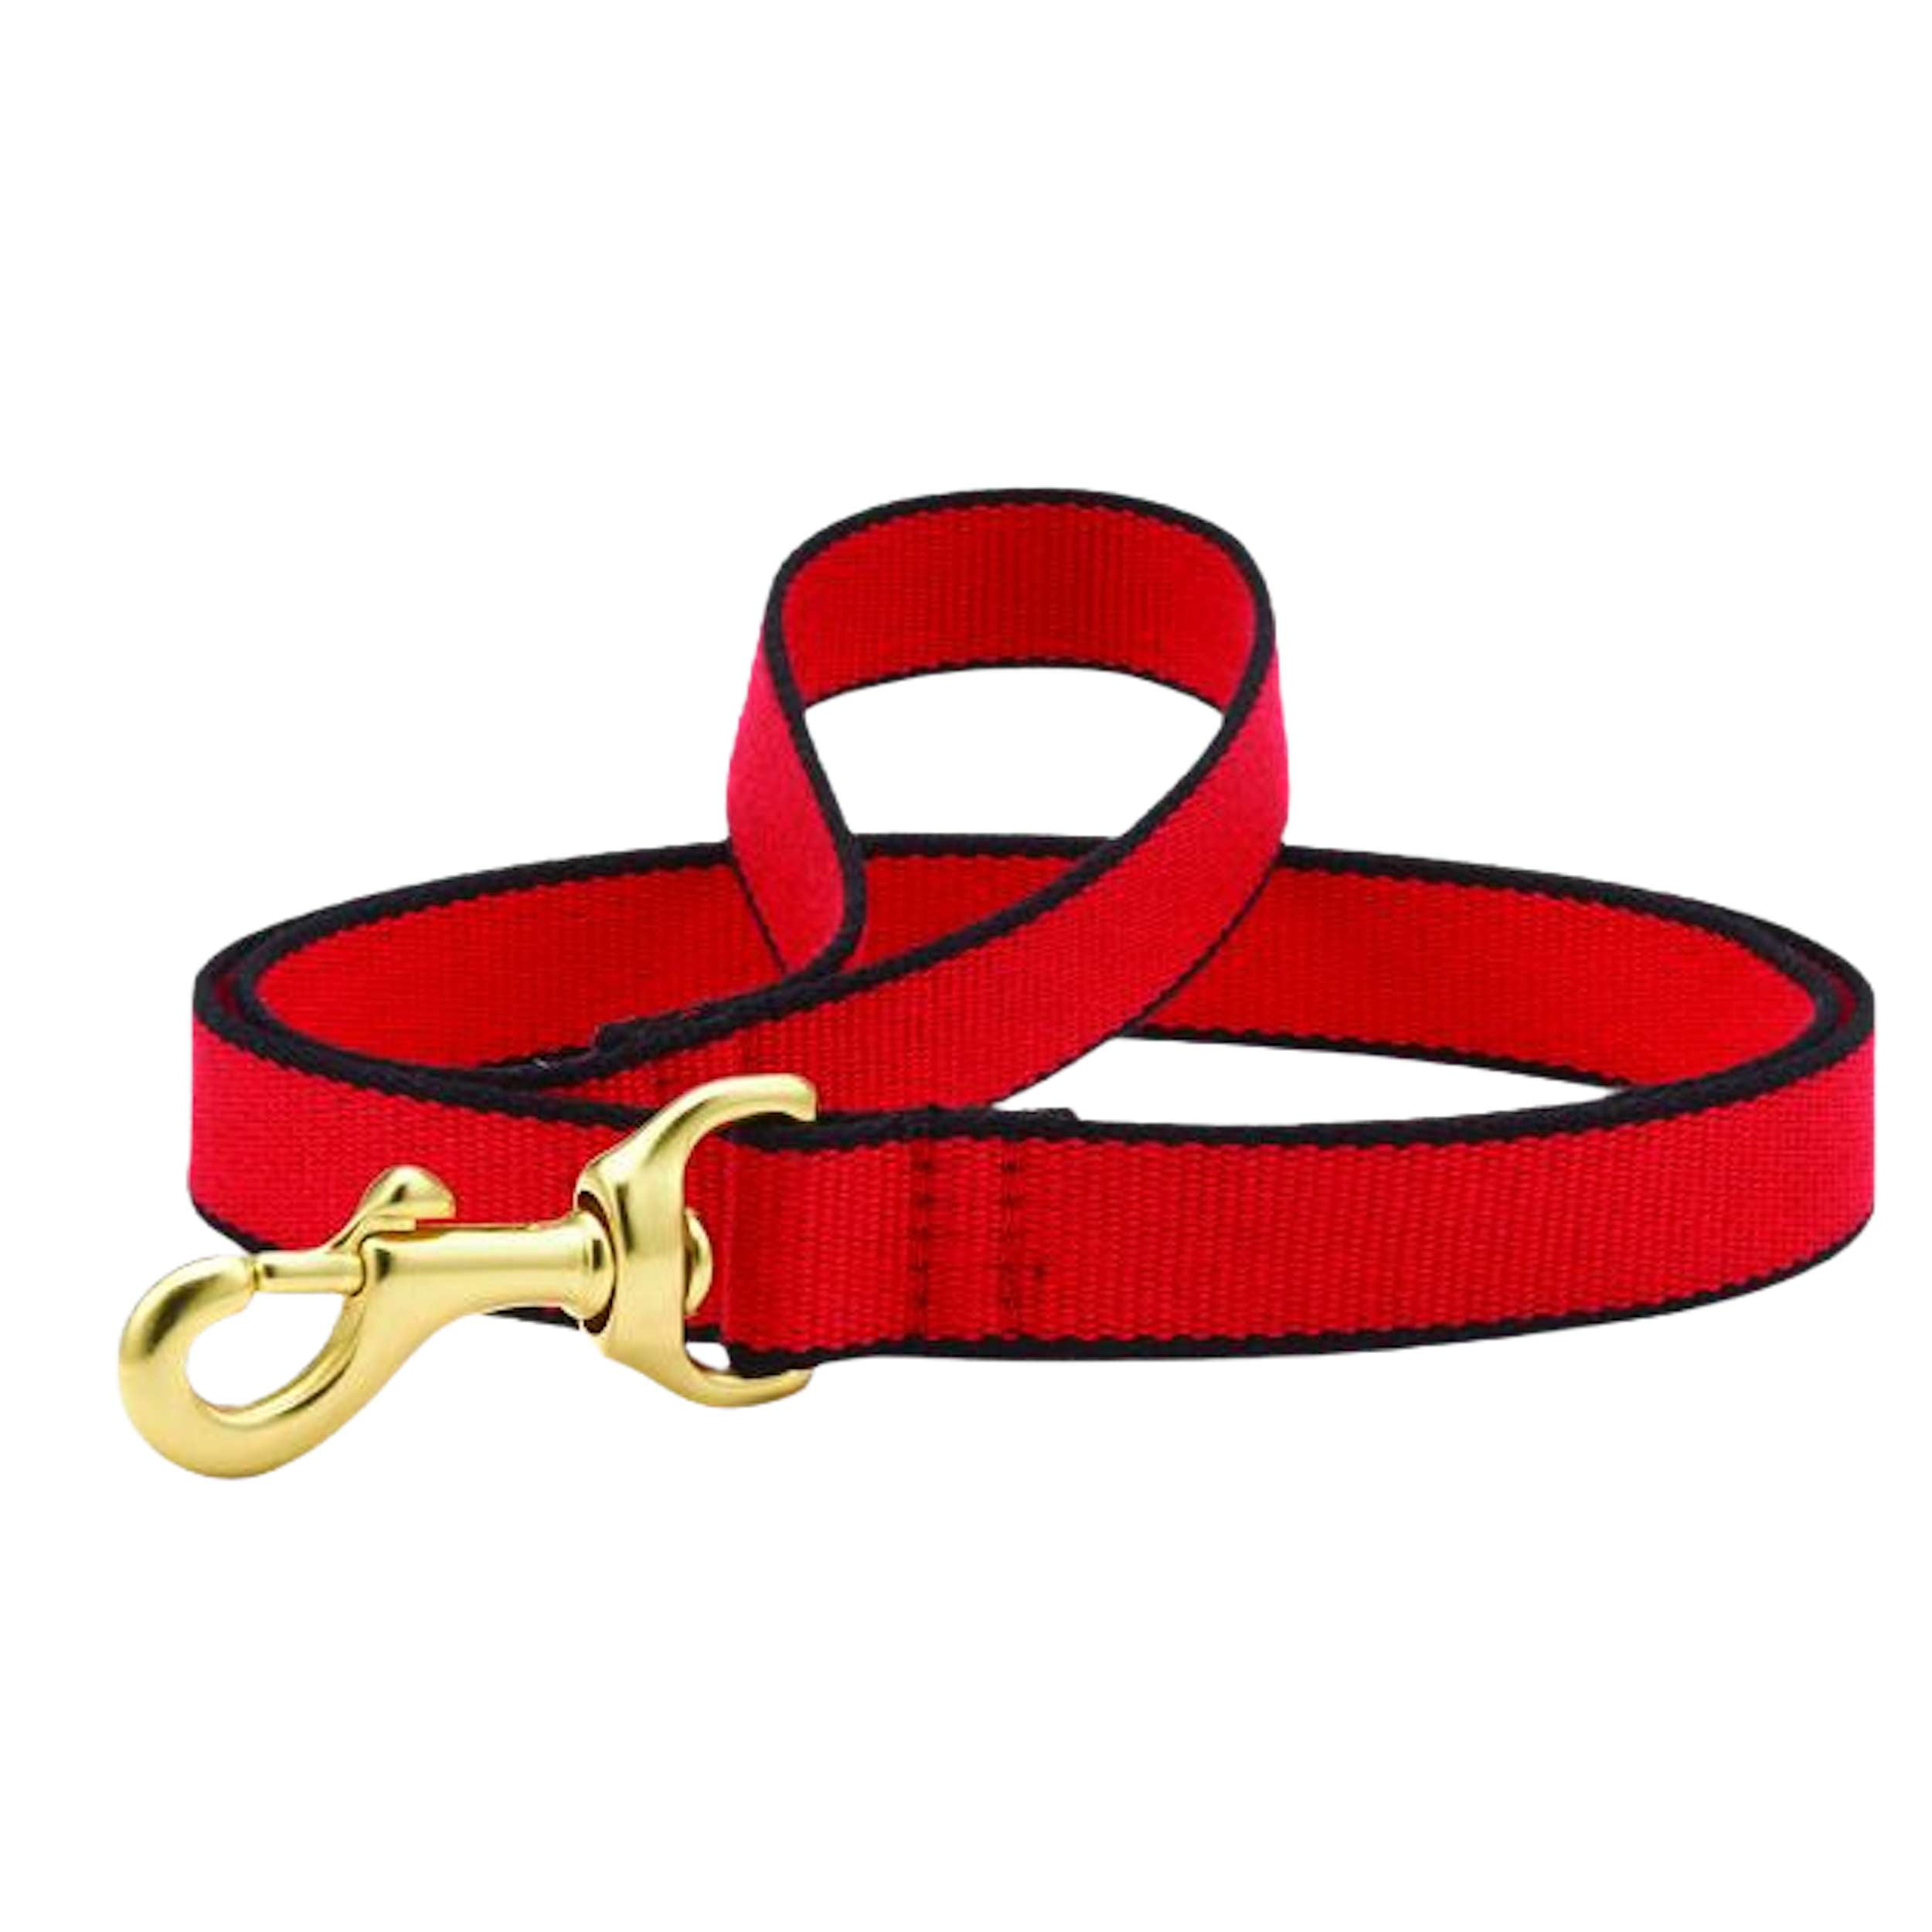 red-black-dog-leash